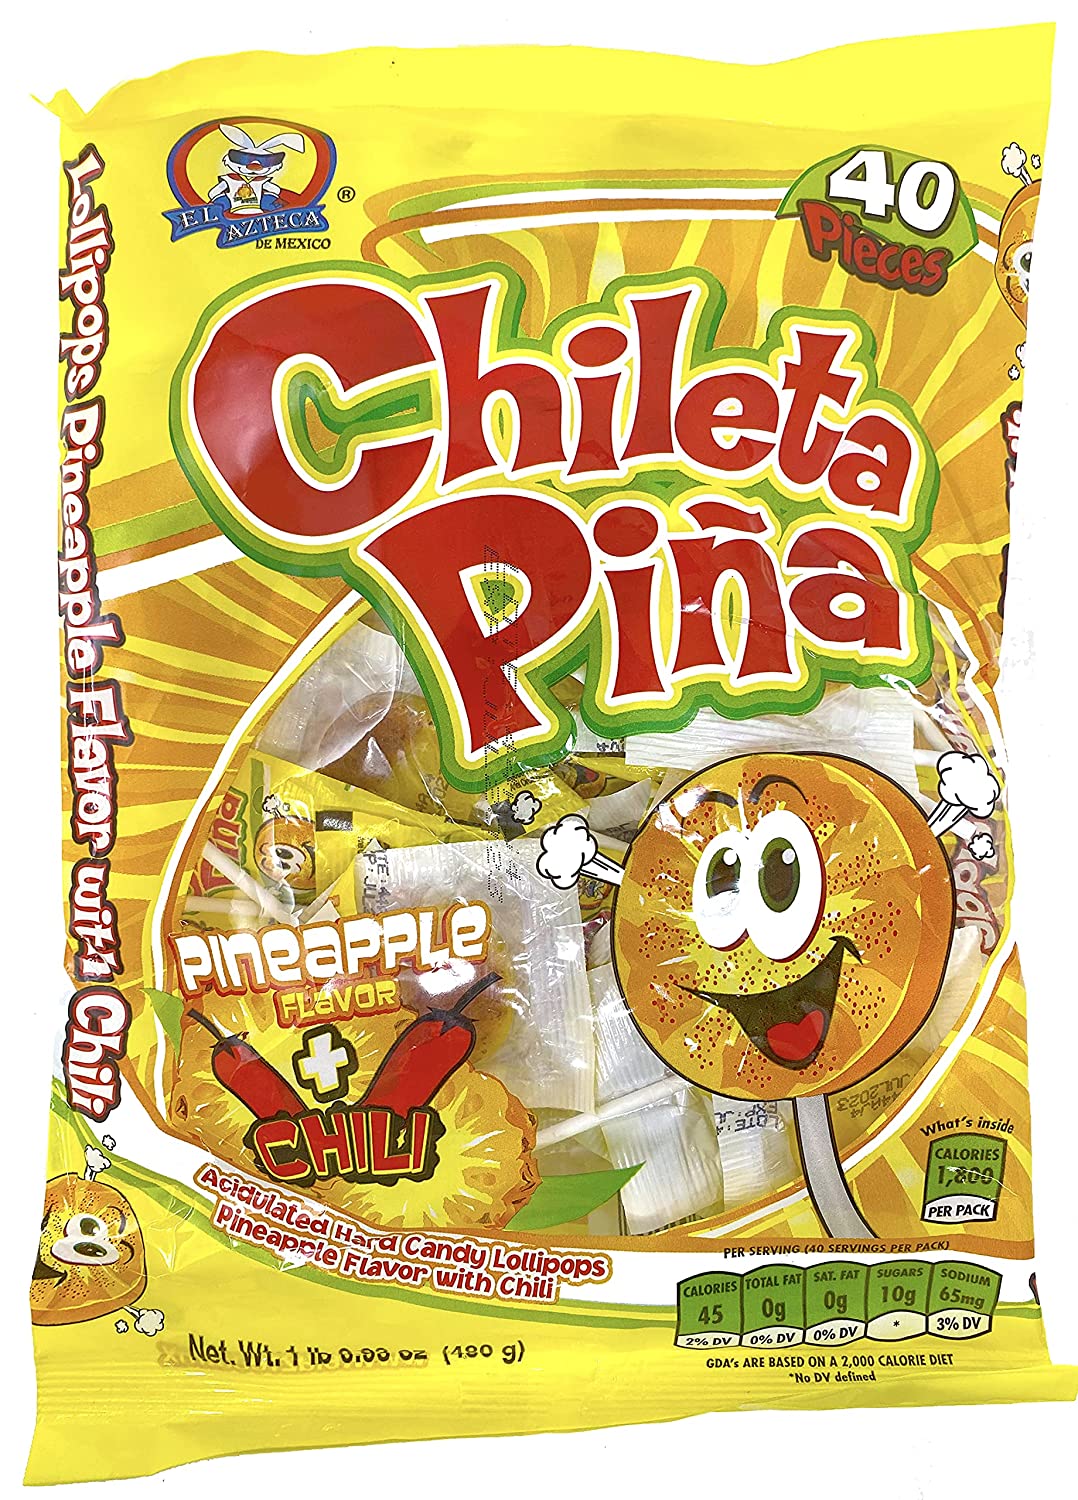 Chileta Pina Lollipop (1)